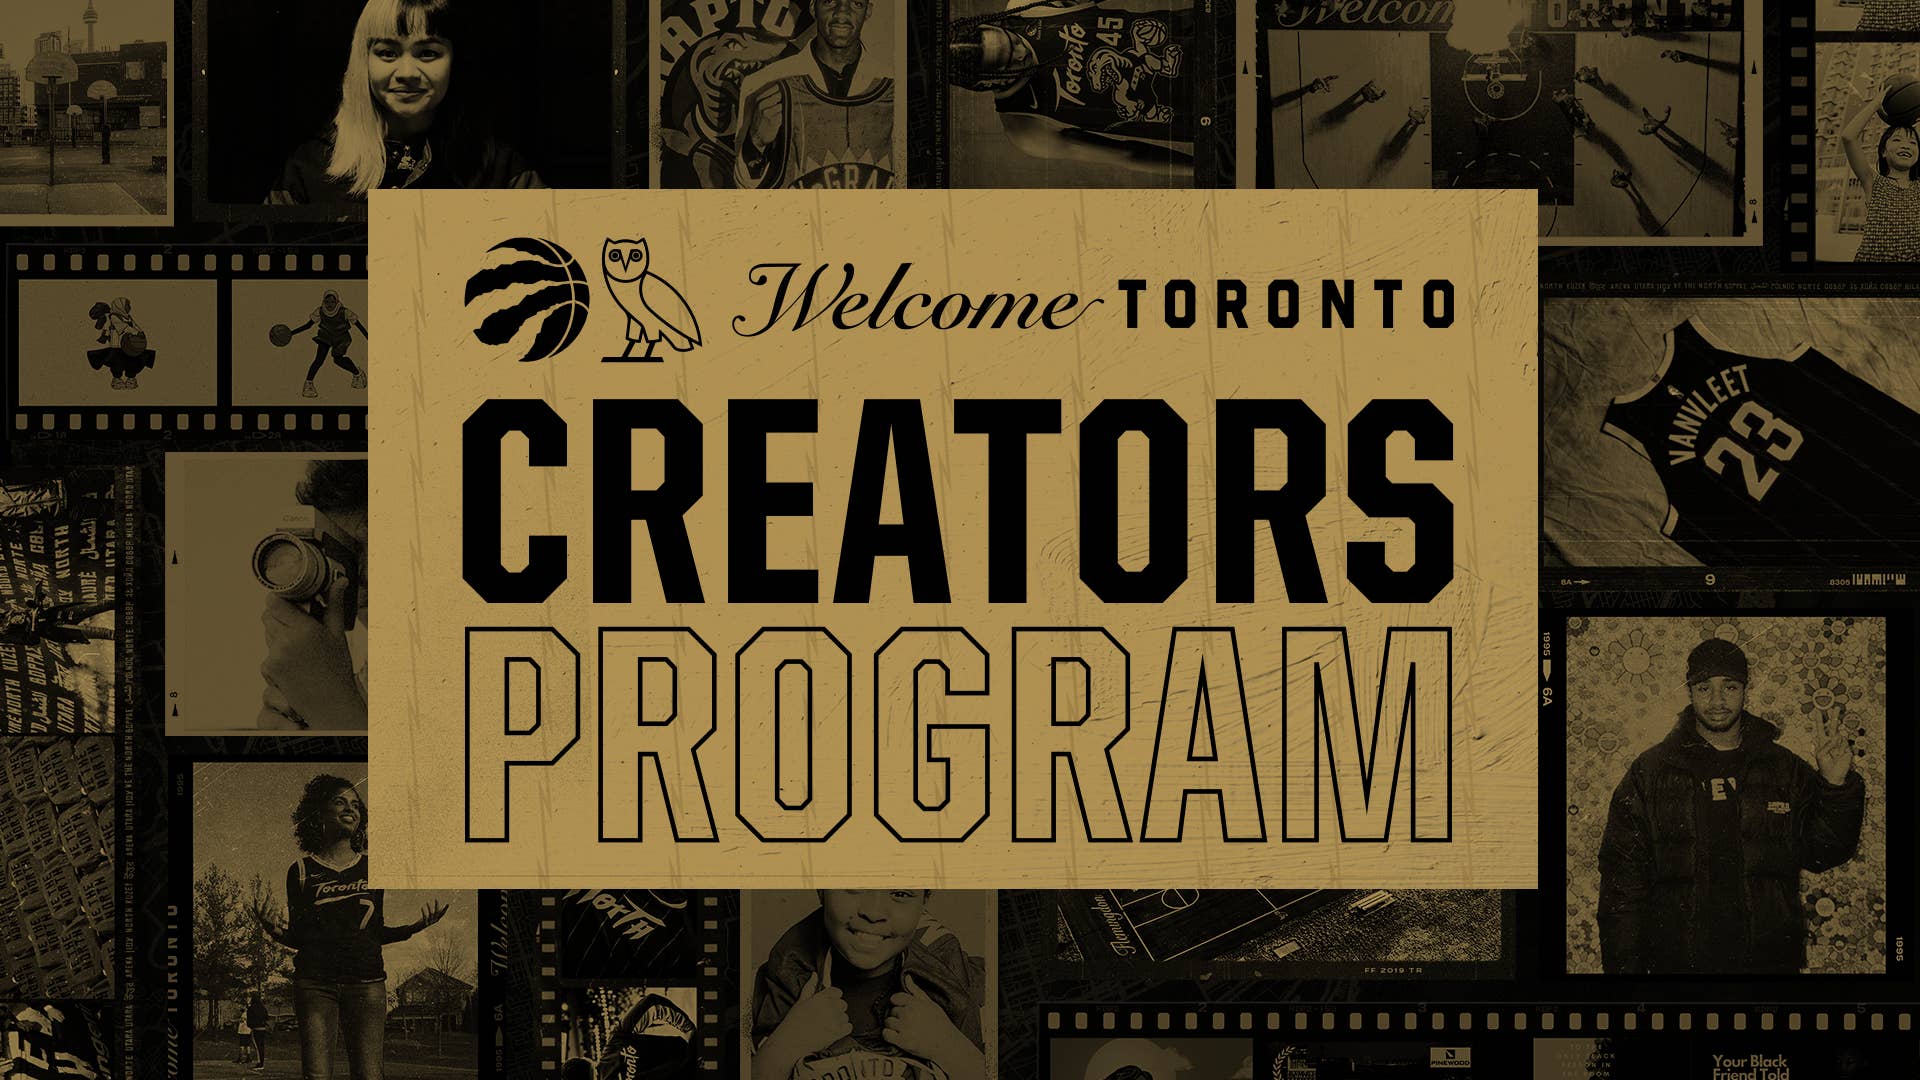 Toronto Raptors unveil three new jerseys for 2021 season - Raptors HQ